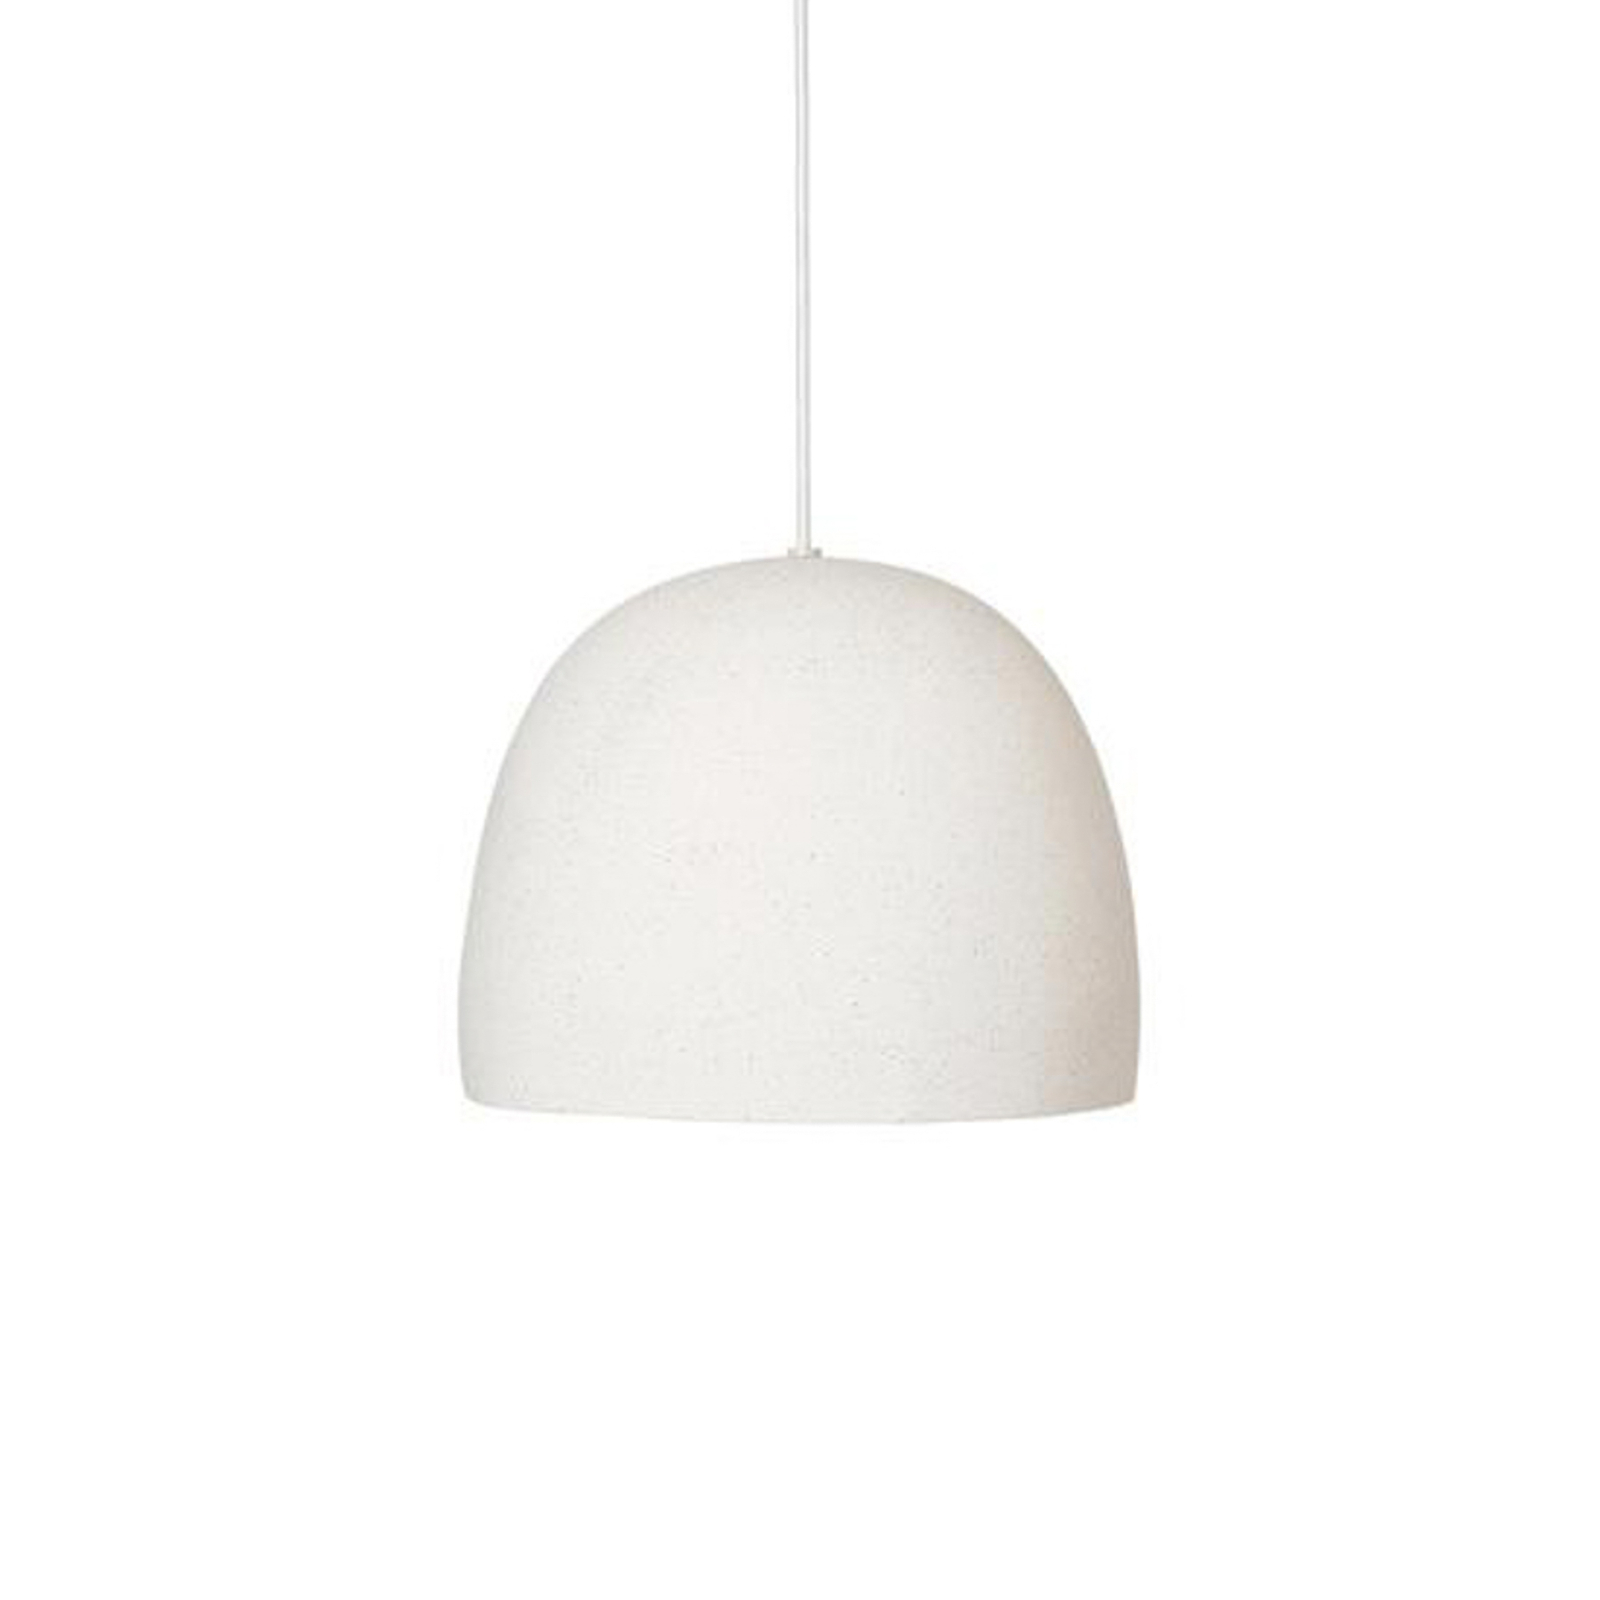 ferm LIVING Speckle pendant light, Ø 30.5 cm, ceramic, white